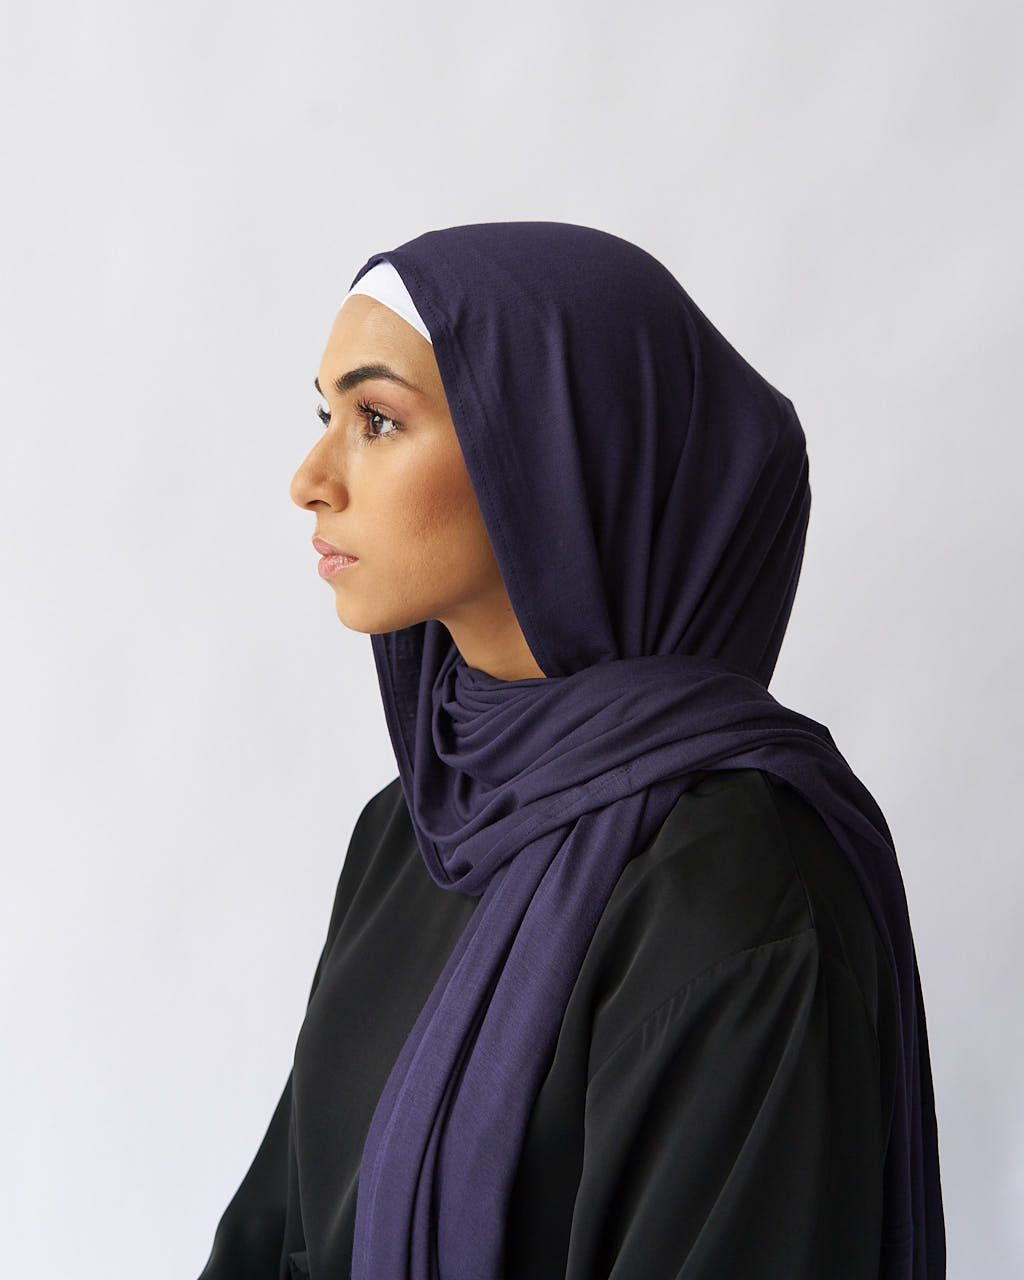 Chiffon Jersey Cotton Modal Pashmina Hijabs Sydney Brisbane Australia Fajr Noor